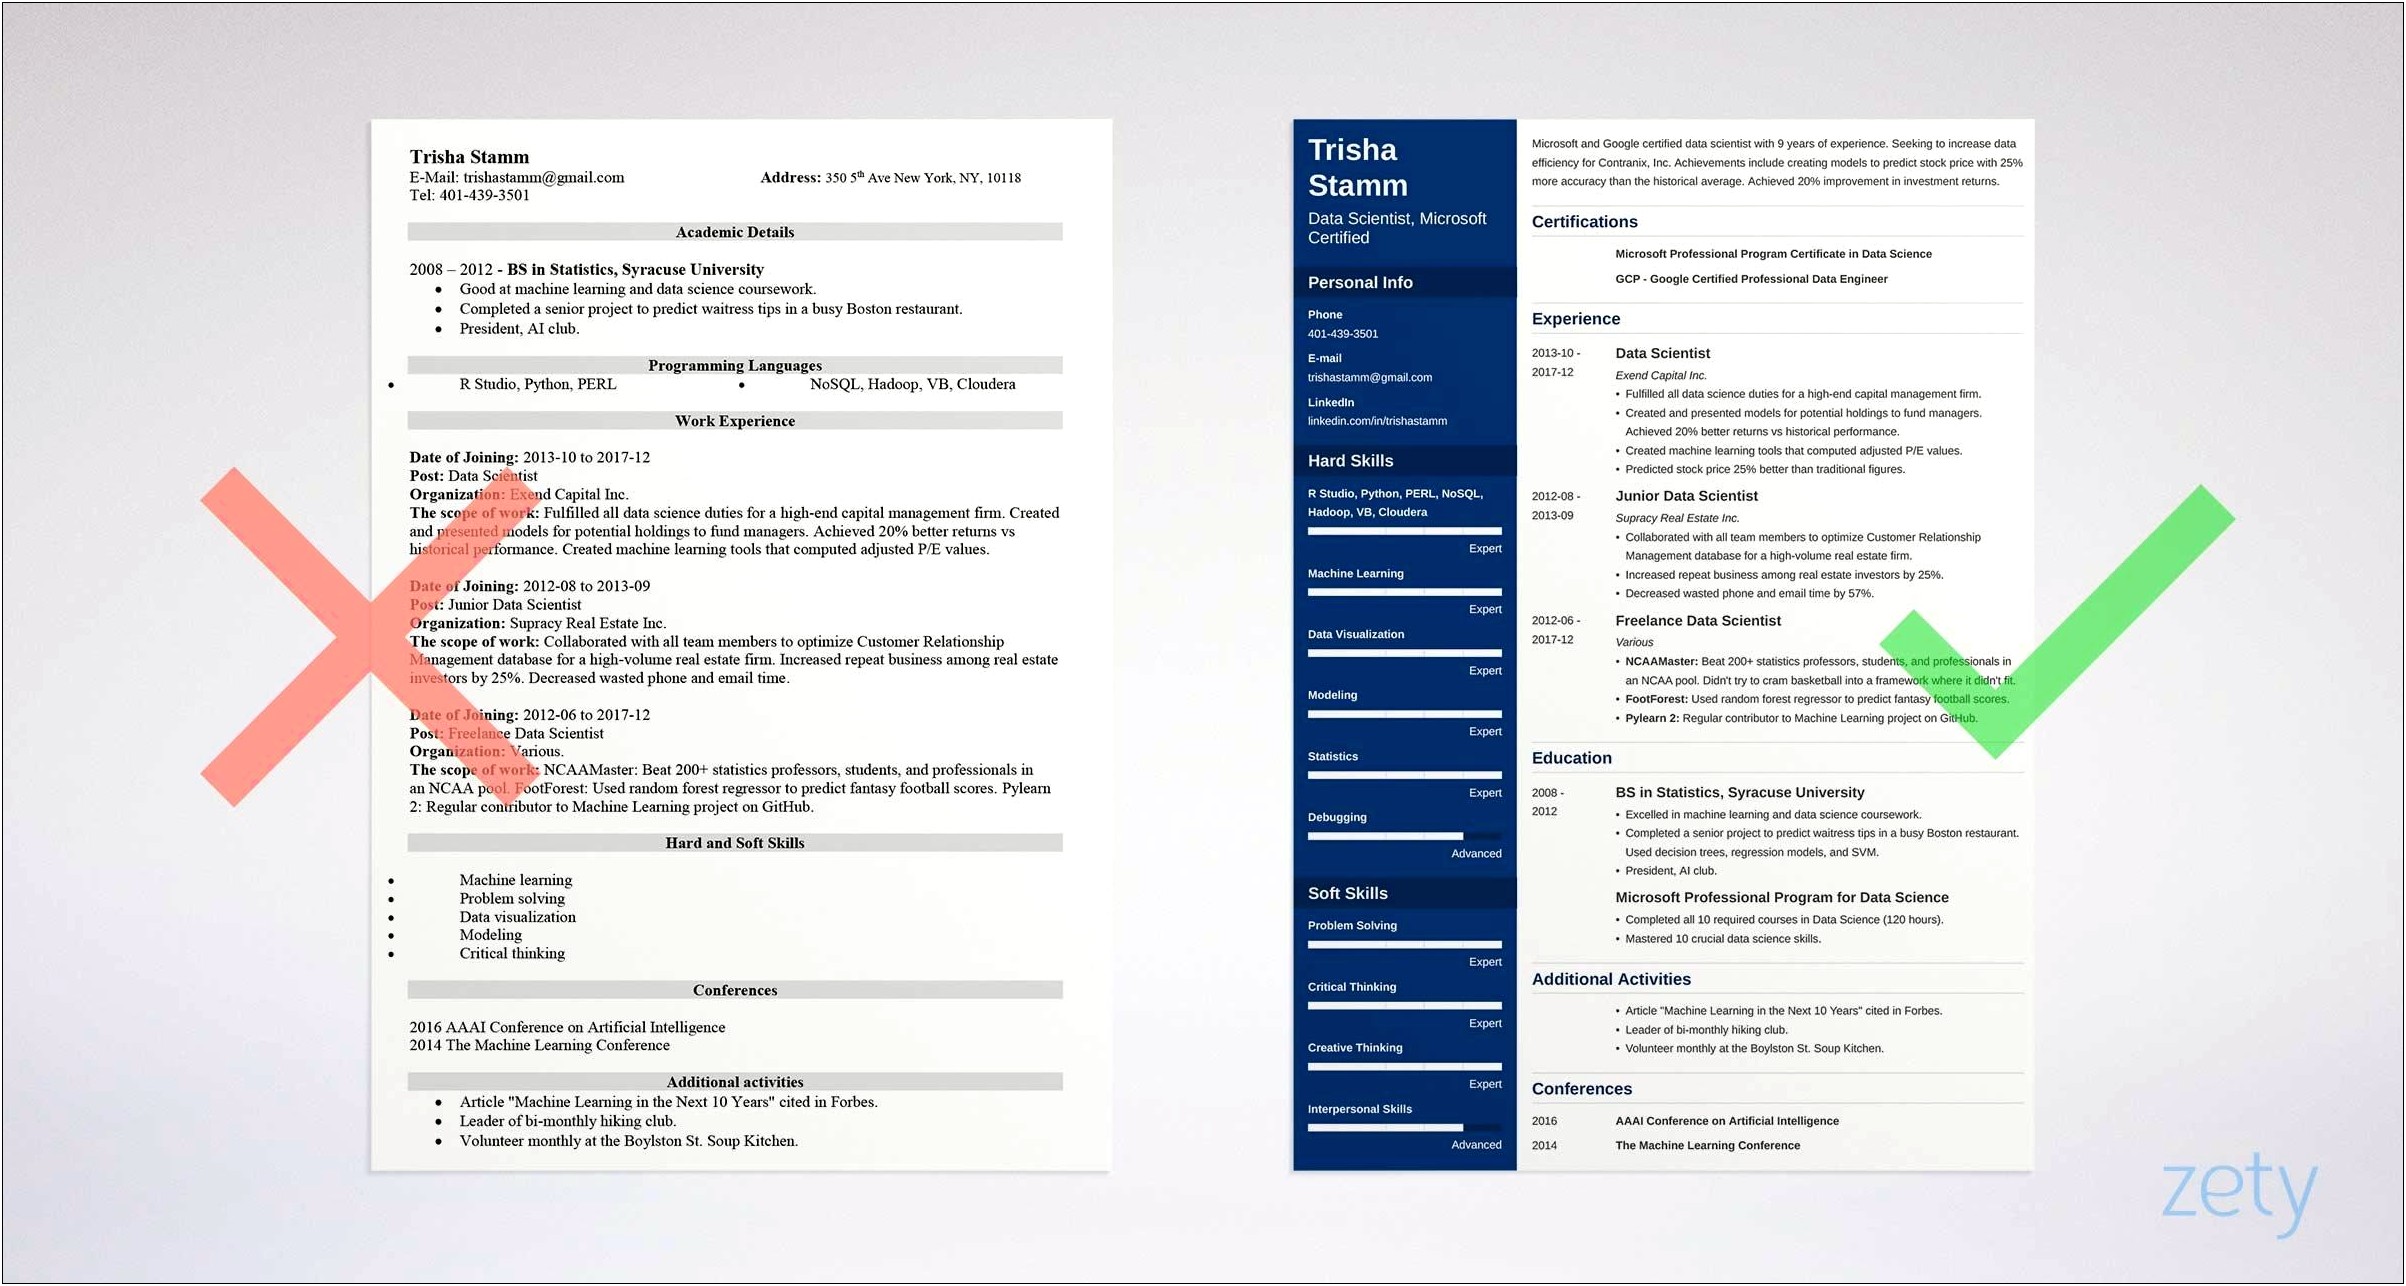 Data Manager Job Description Resume Sample